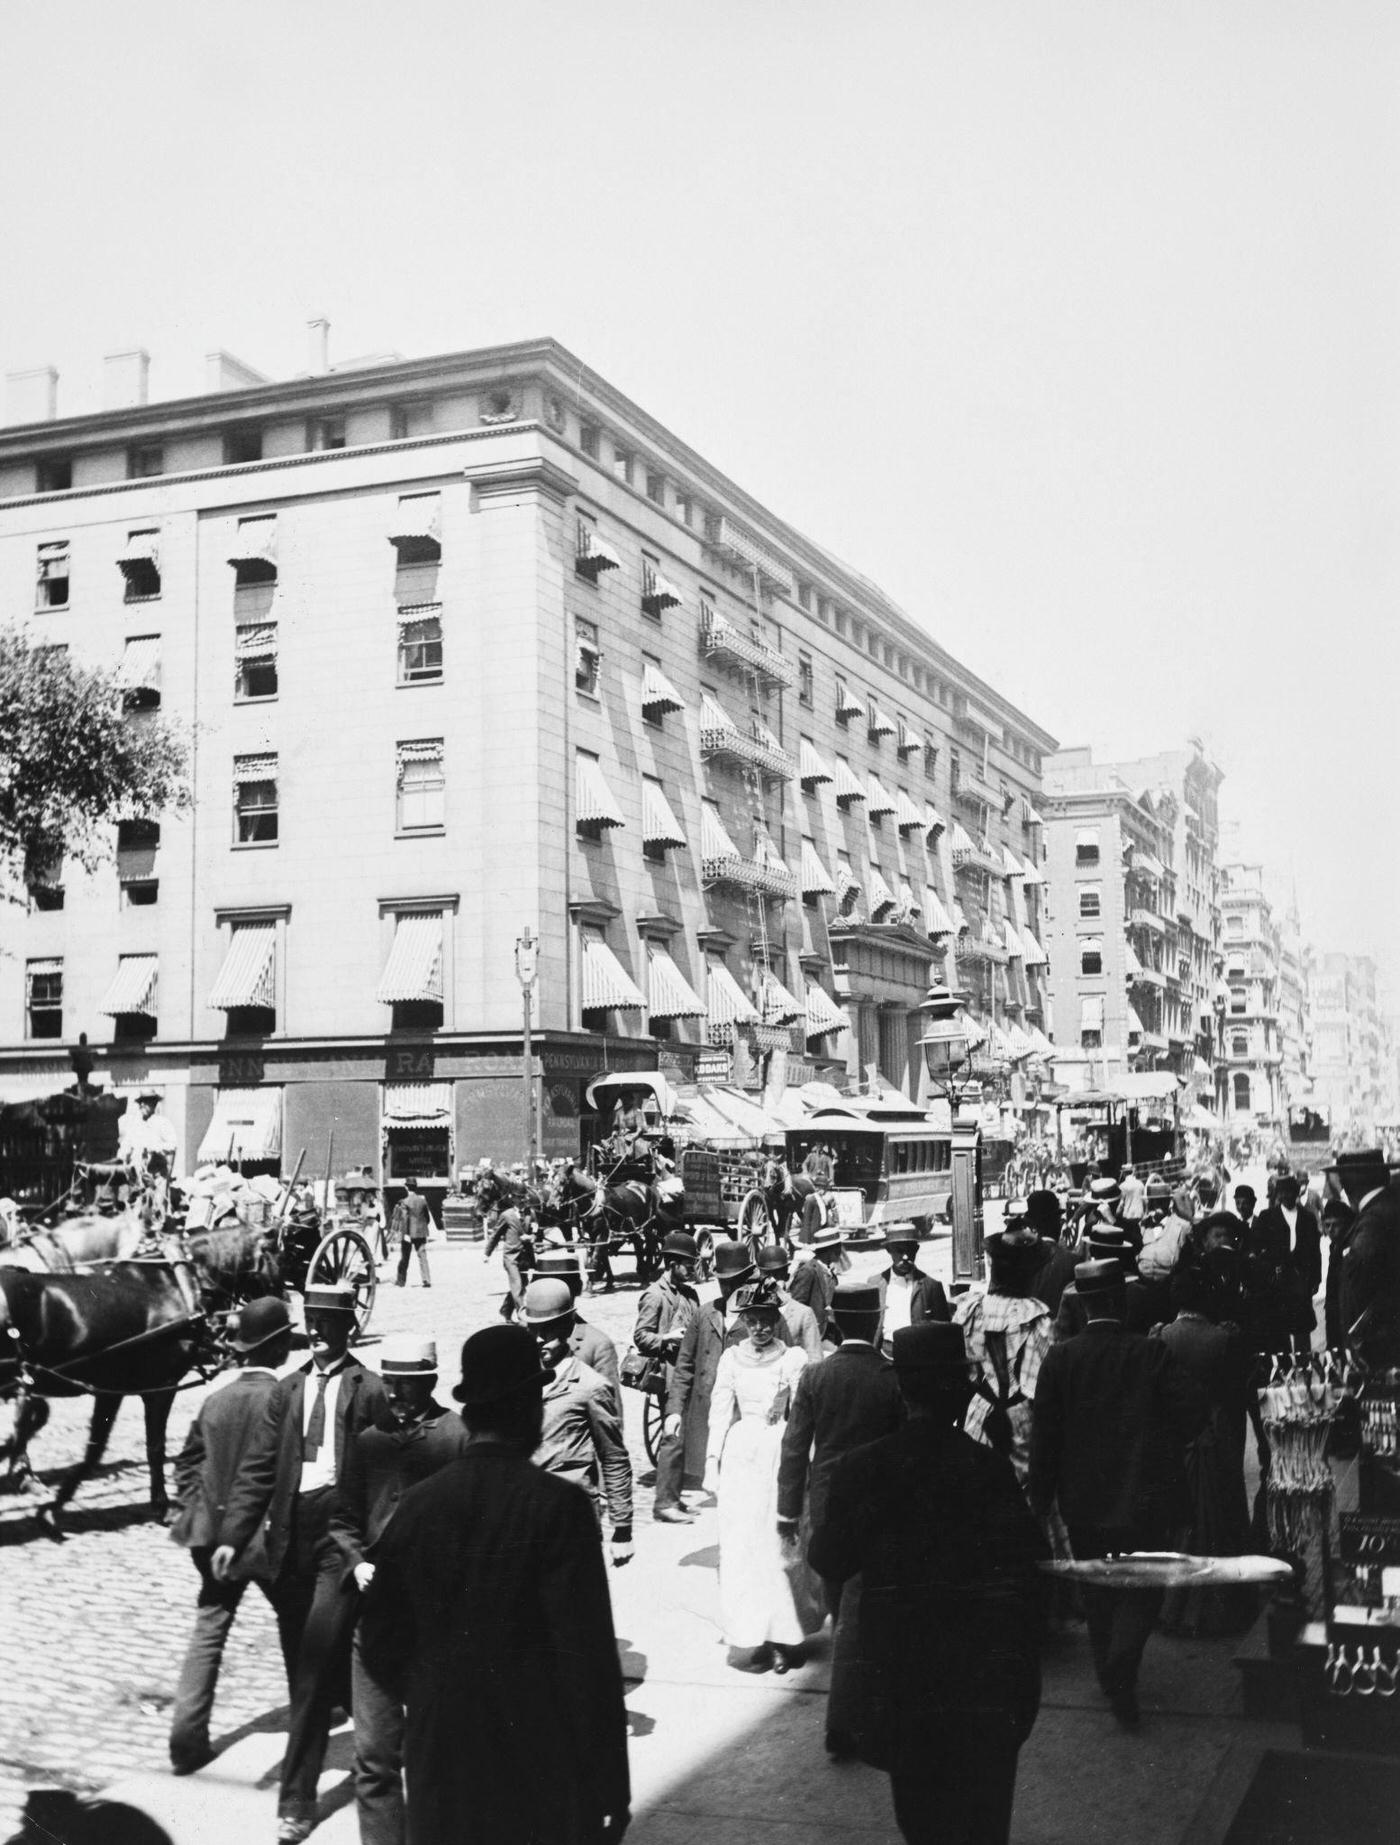 Traffic Outside The Astor House Hotel, 1914